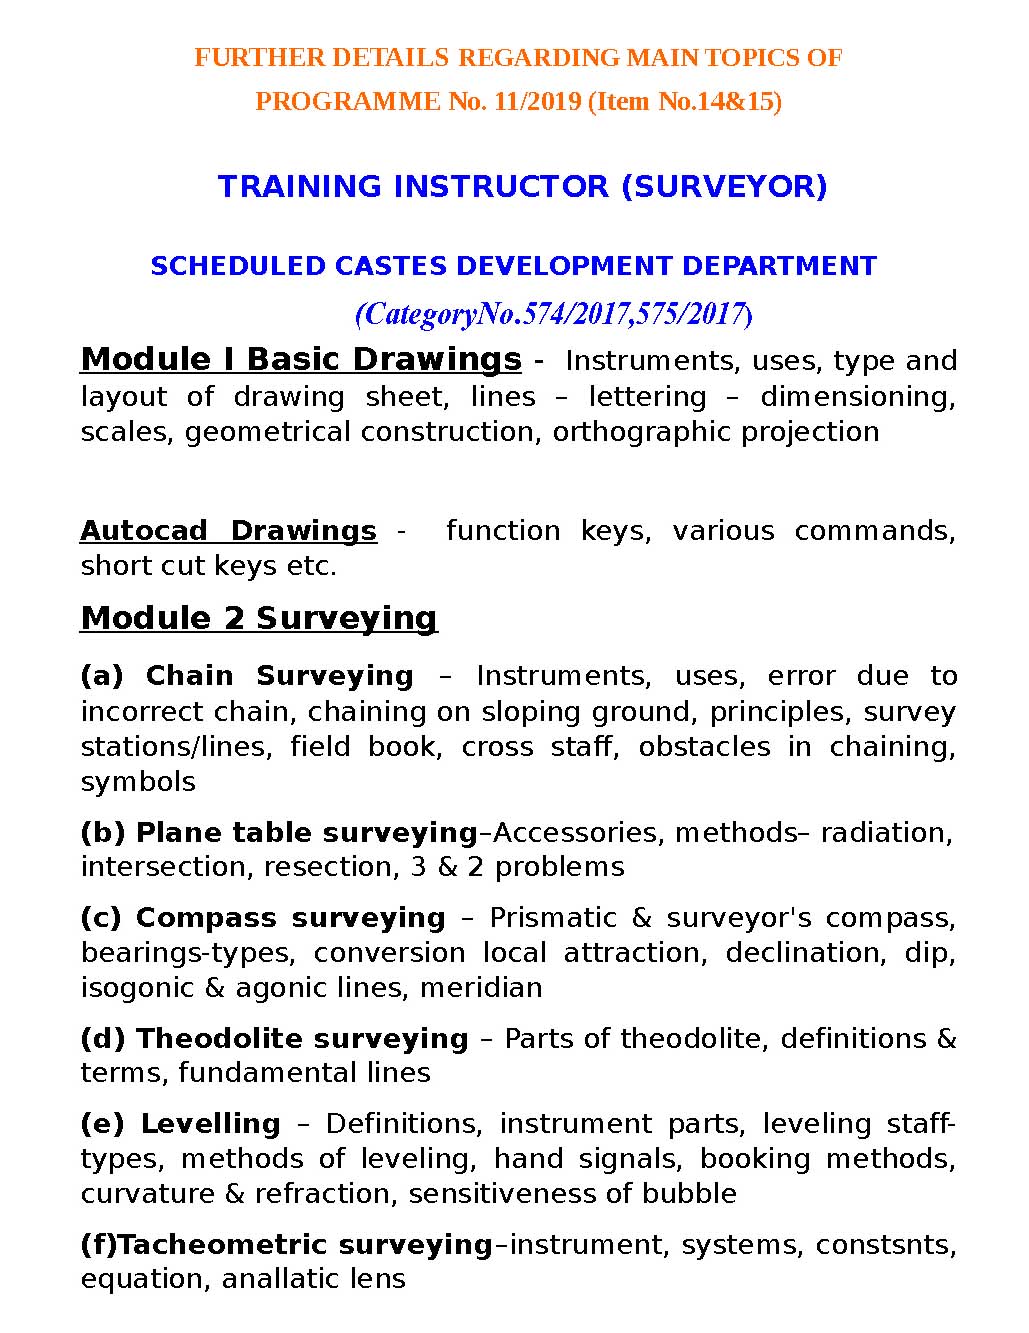 KPSC Syllabus for Training Instructor Surveyor Exam 2019 - Notification Image 1